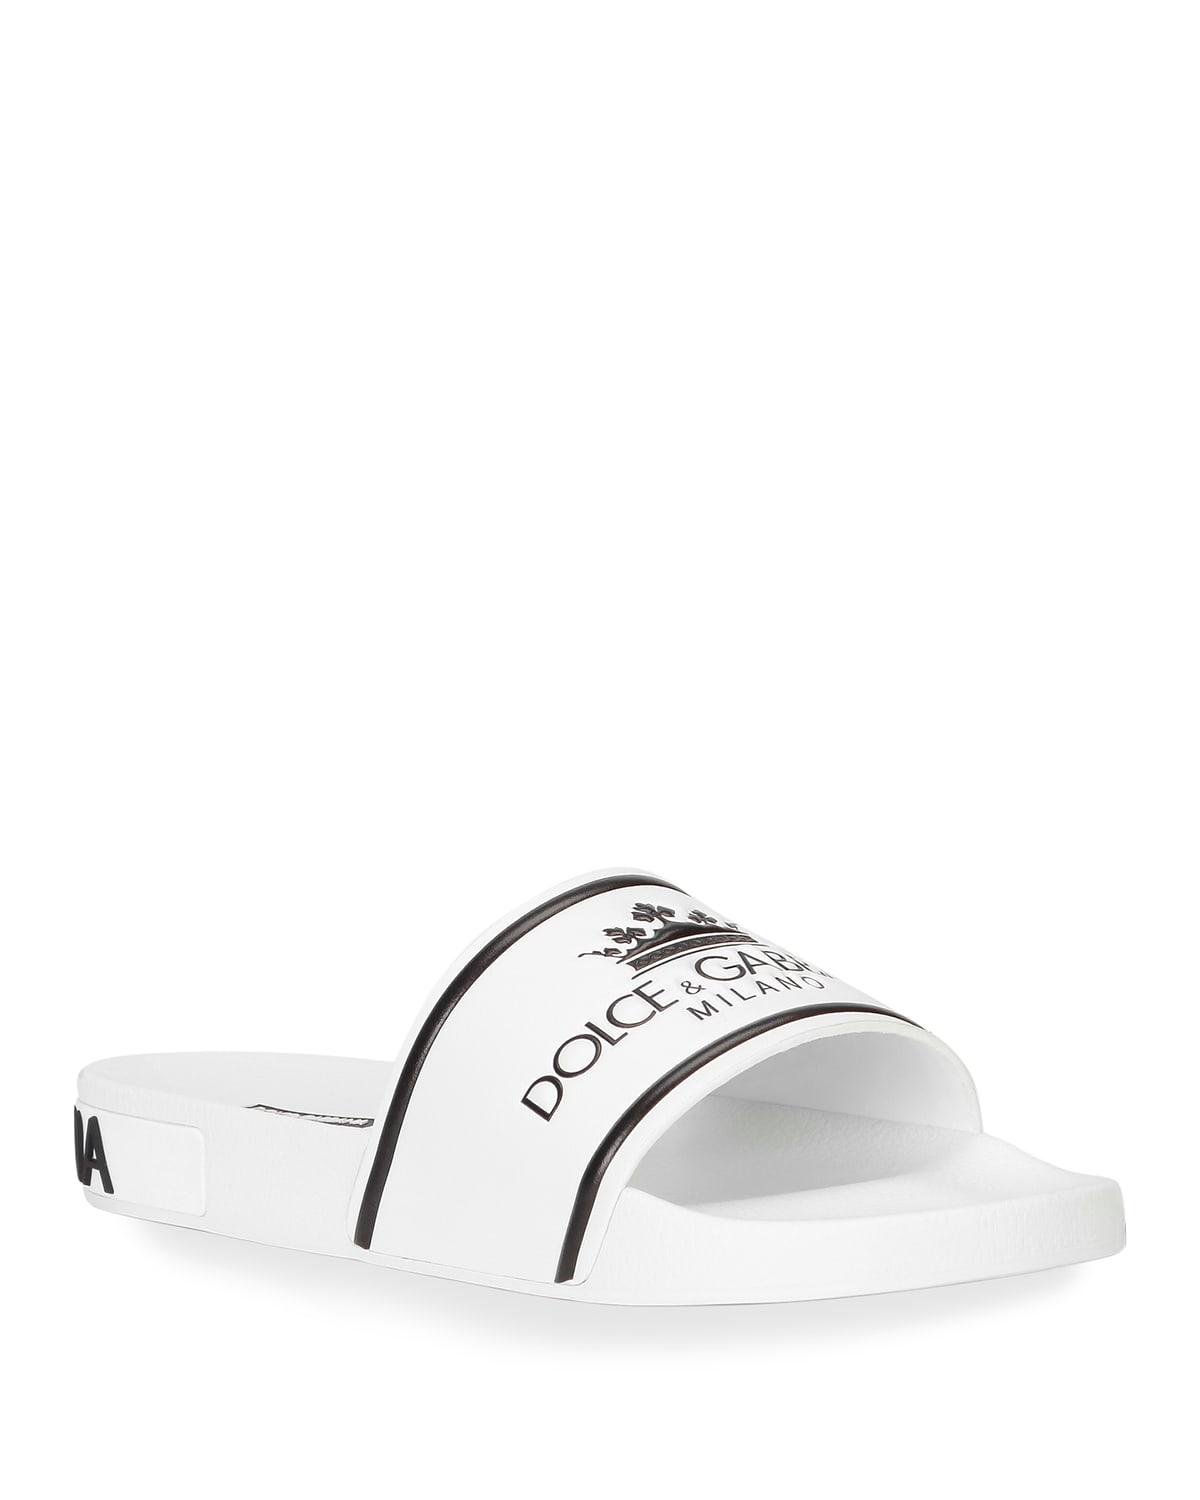 Dolce & Gabbana Dg Milano Logo Pool Slide Sandals in Metallic for Men | Lyst